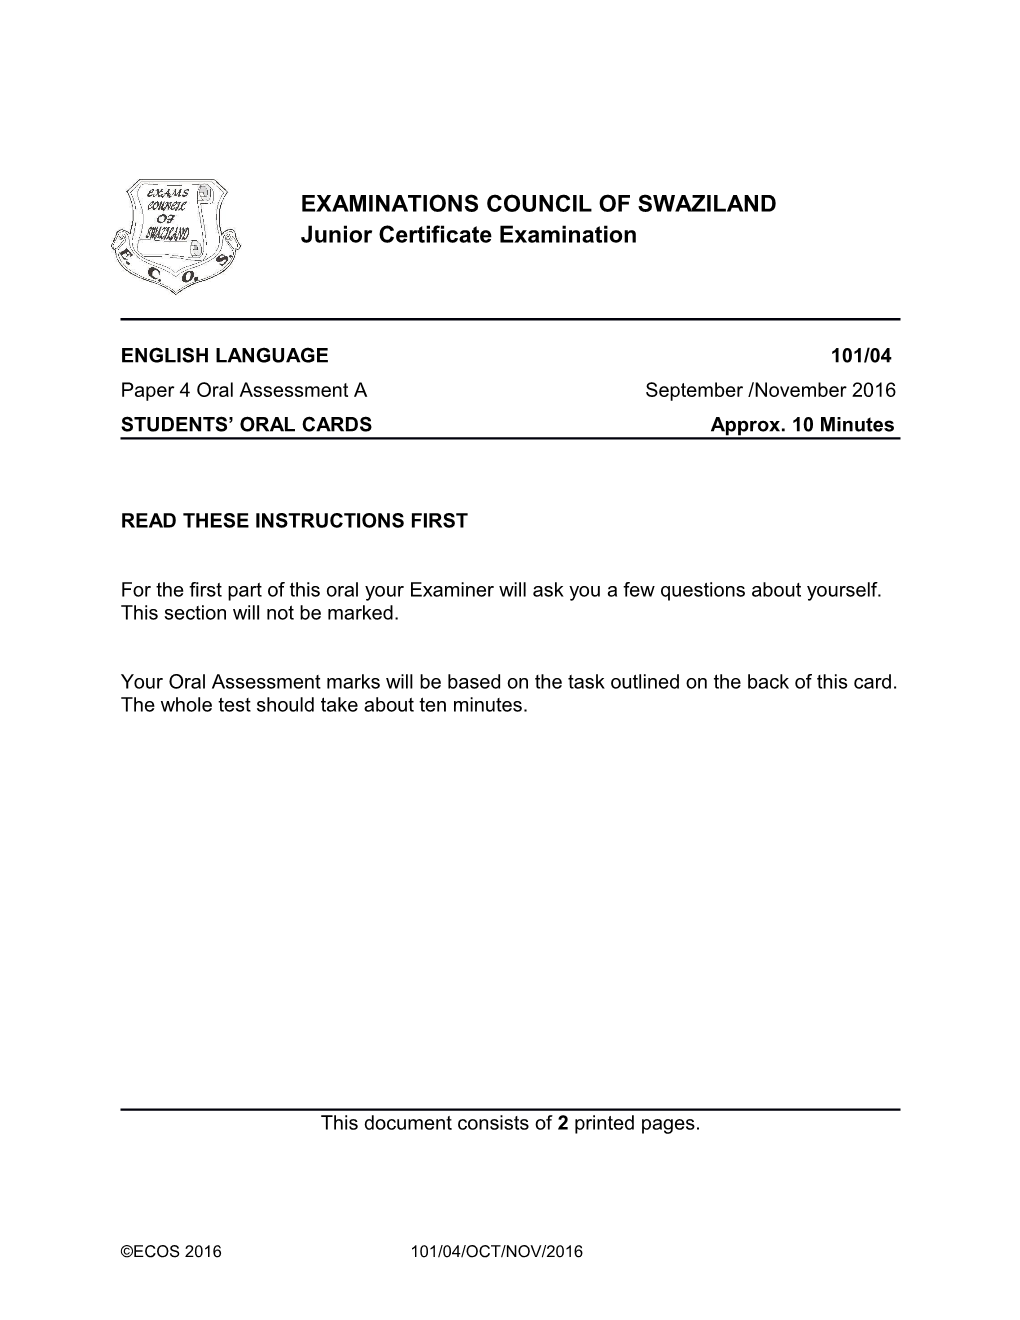 Examinations Council of Swaziland